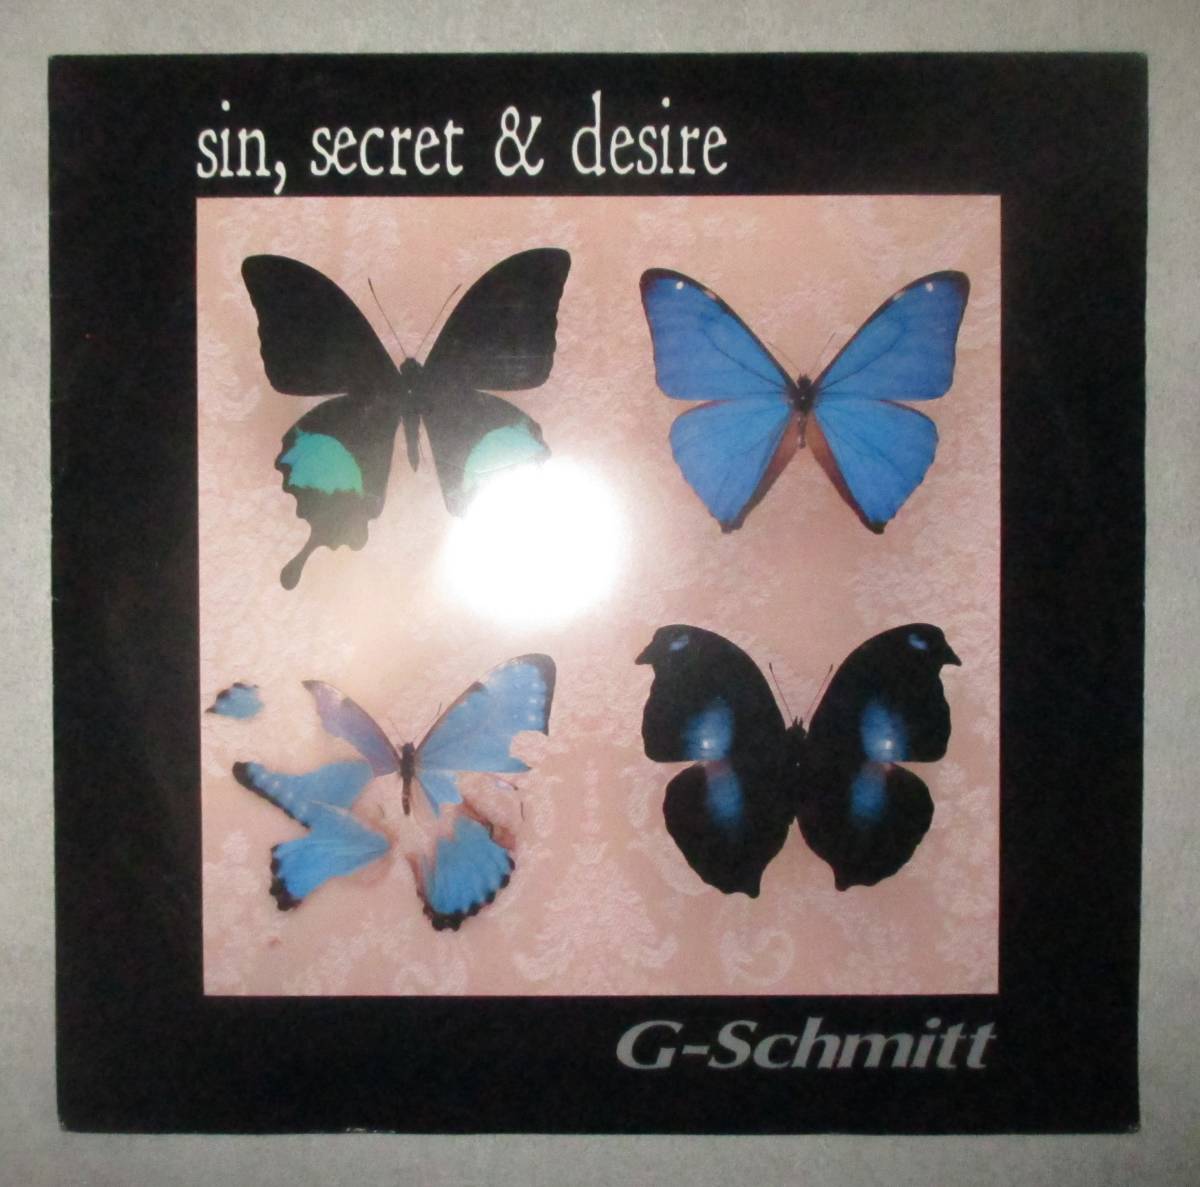 G-Schmitt 　G-シュミット　Sin, Secret & Desire　LP　レコード　インディーズ　ポスター付き　Wechselbalg　廃盤　貴重　レア